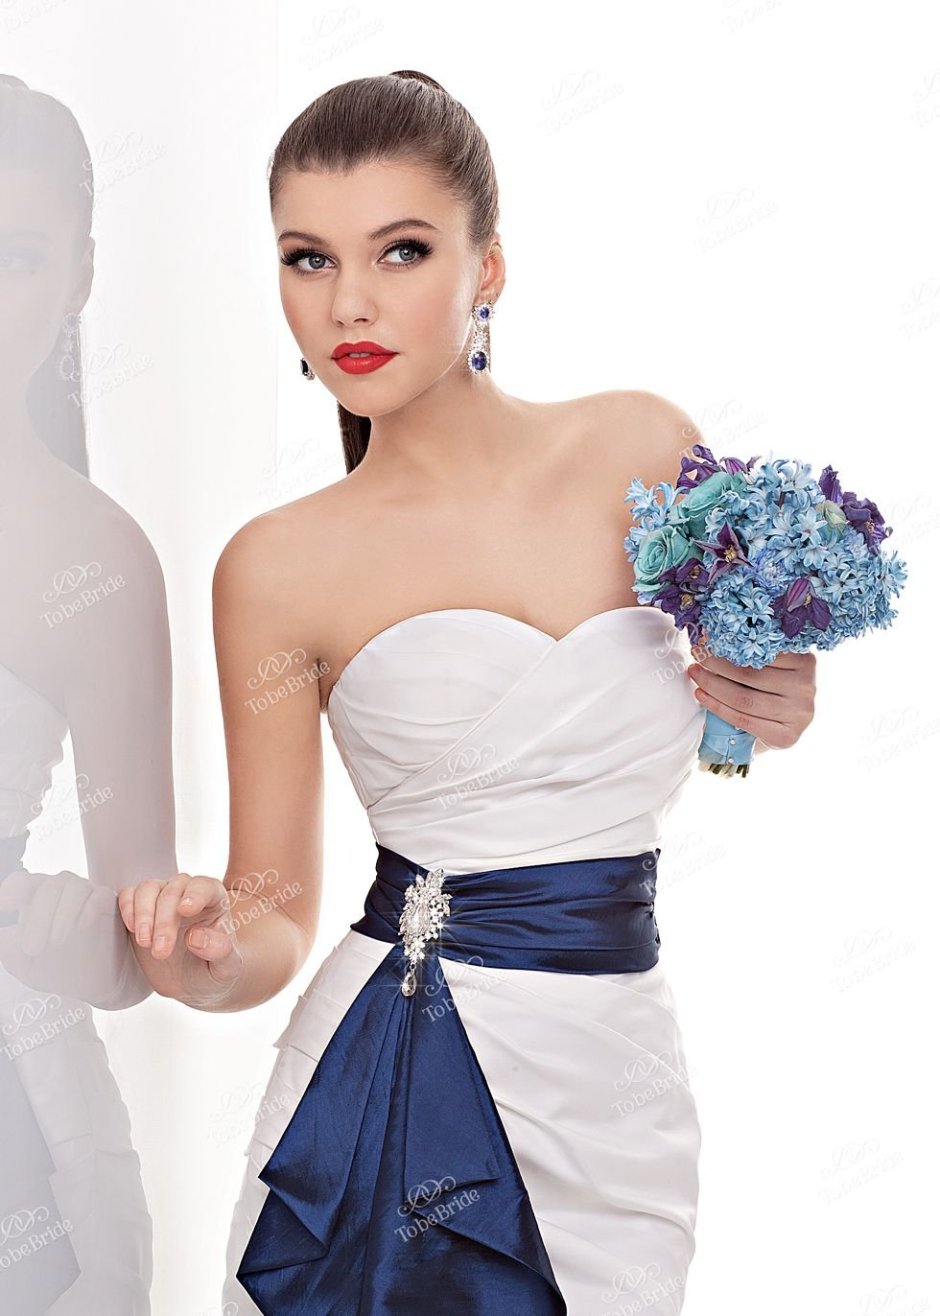 Свадьба в синем стиле